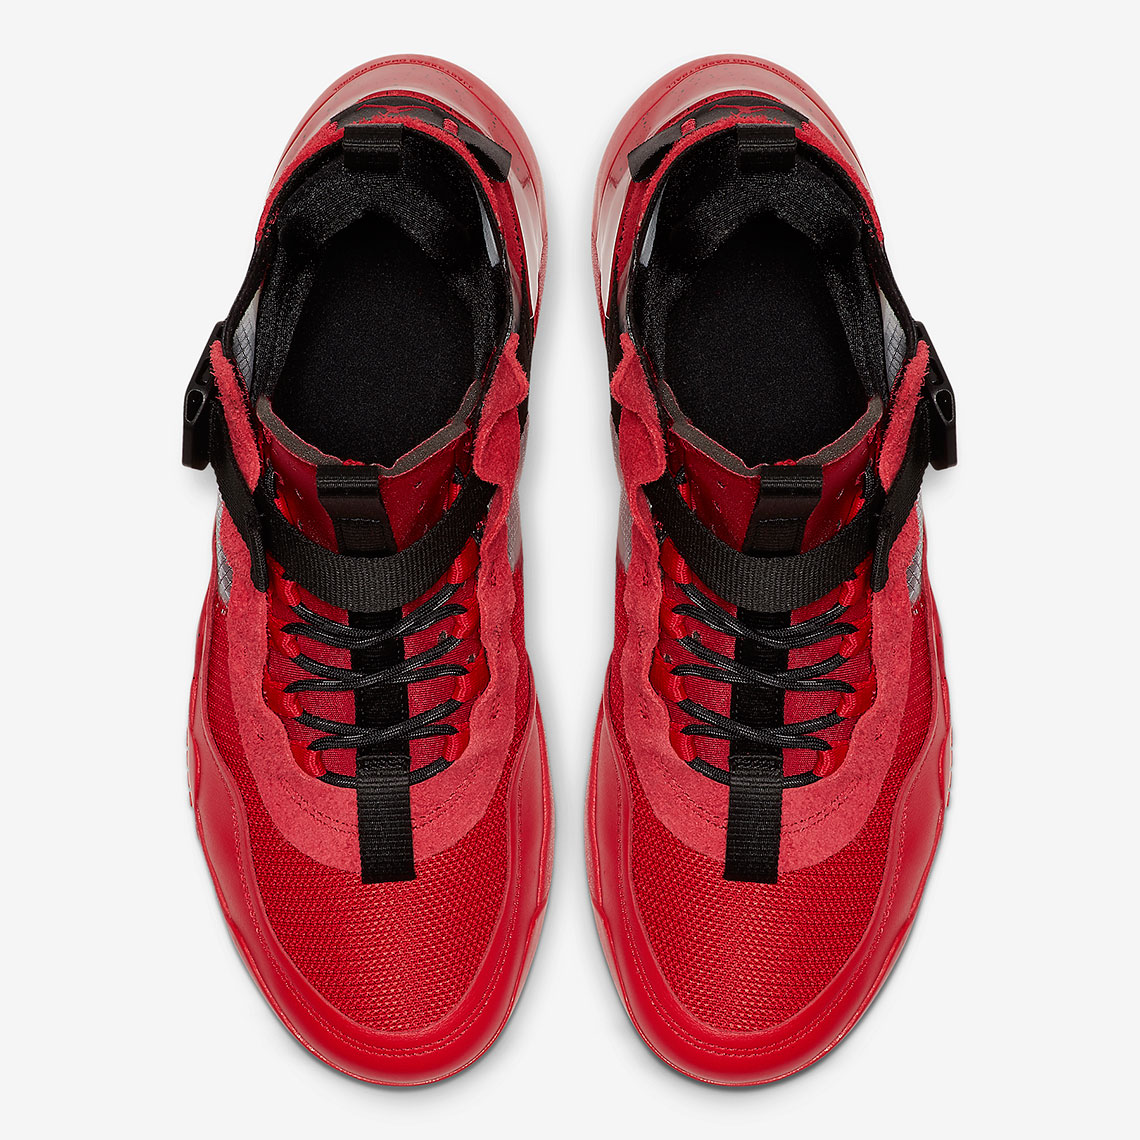 Jordan Defy SP Red Raging Bull CJ7698-600 Release Info | SneakerNews.com